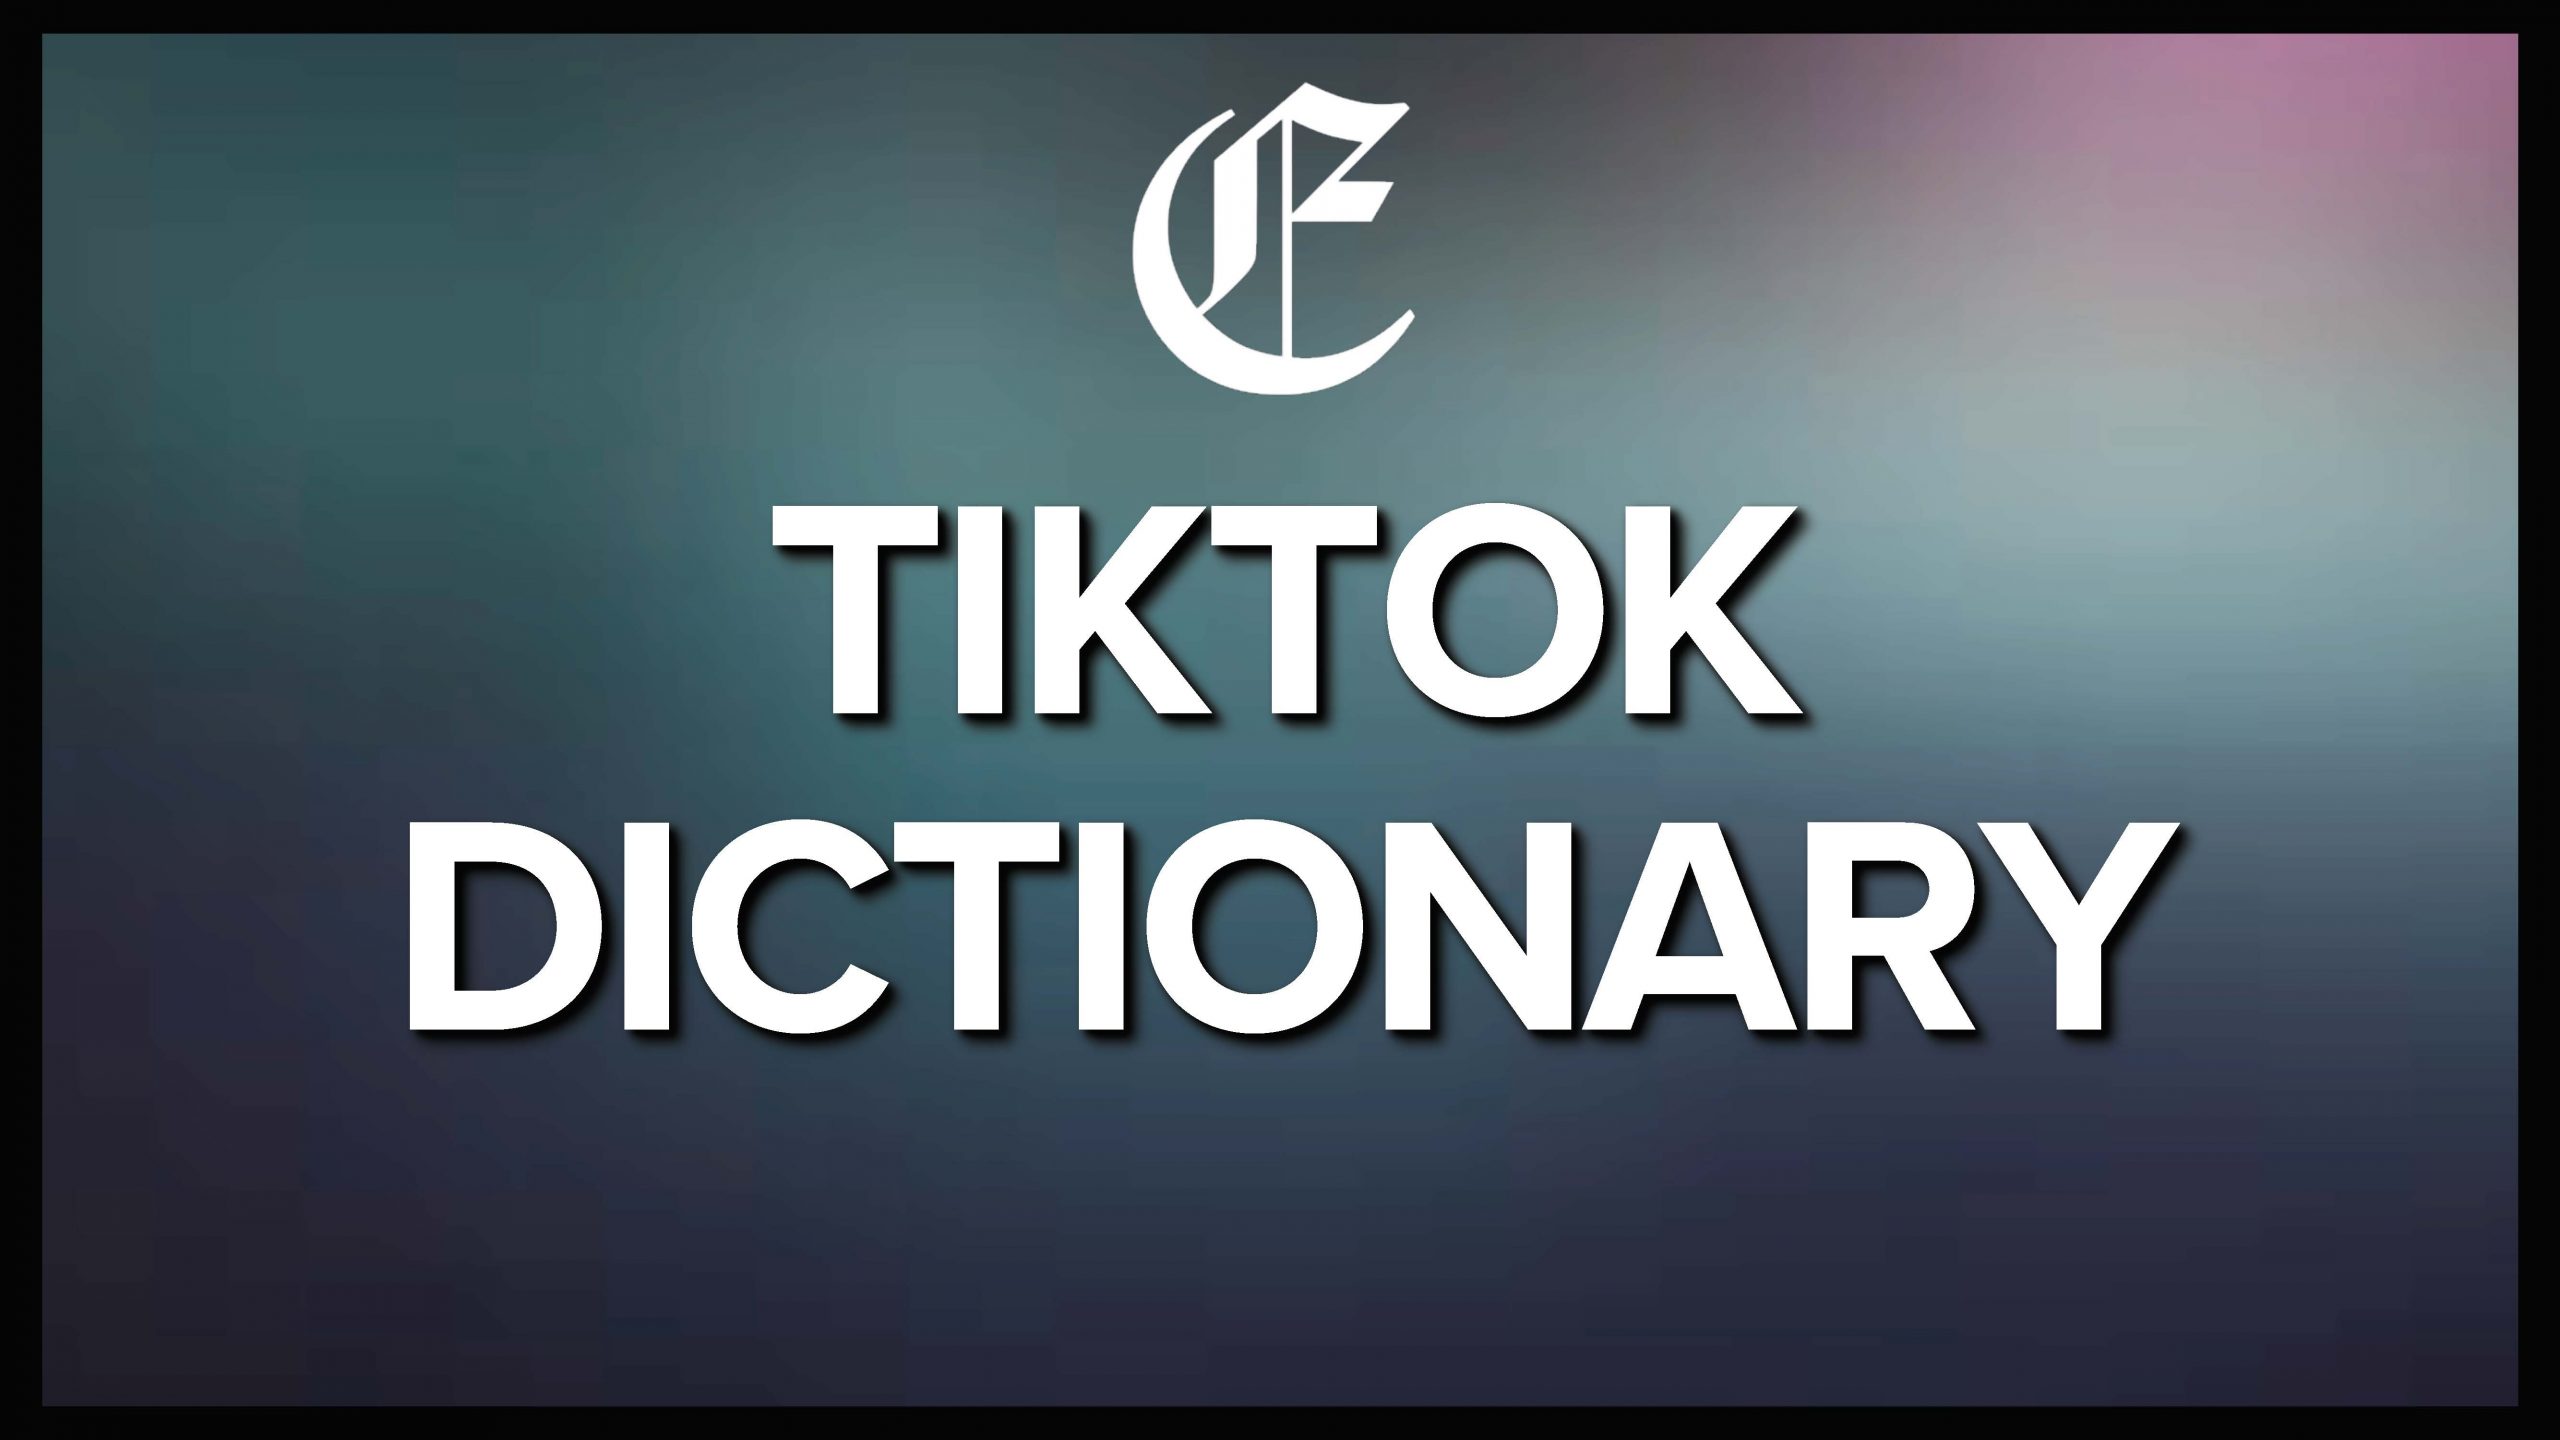 TikTok Disctionary